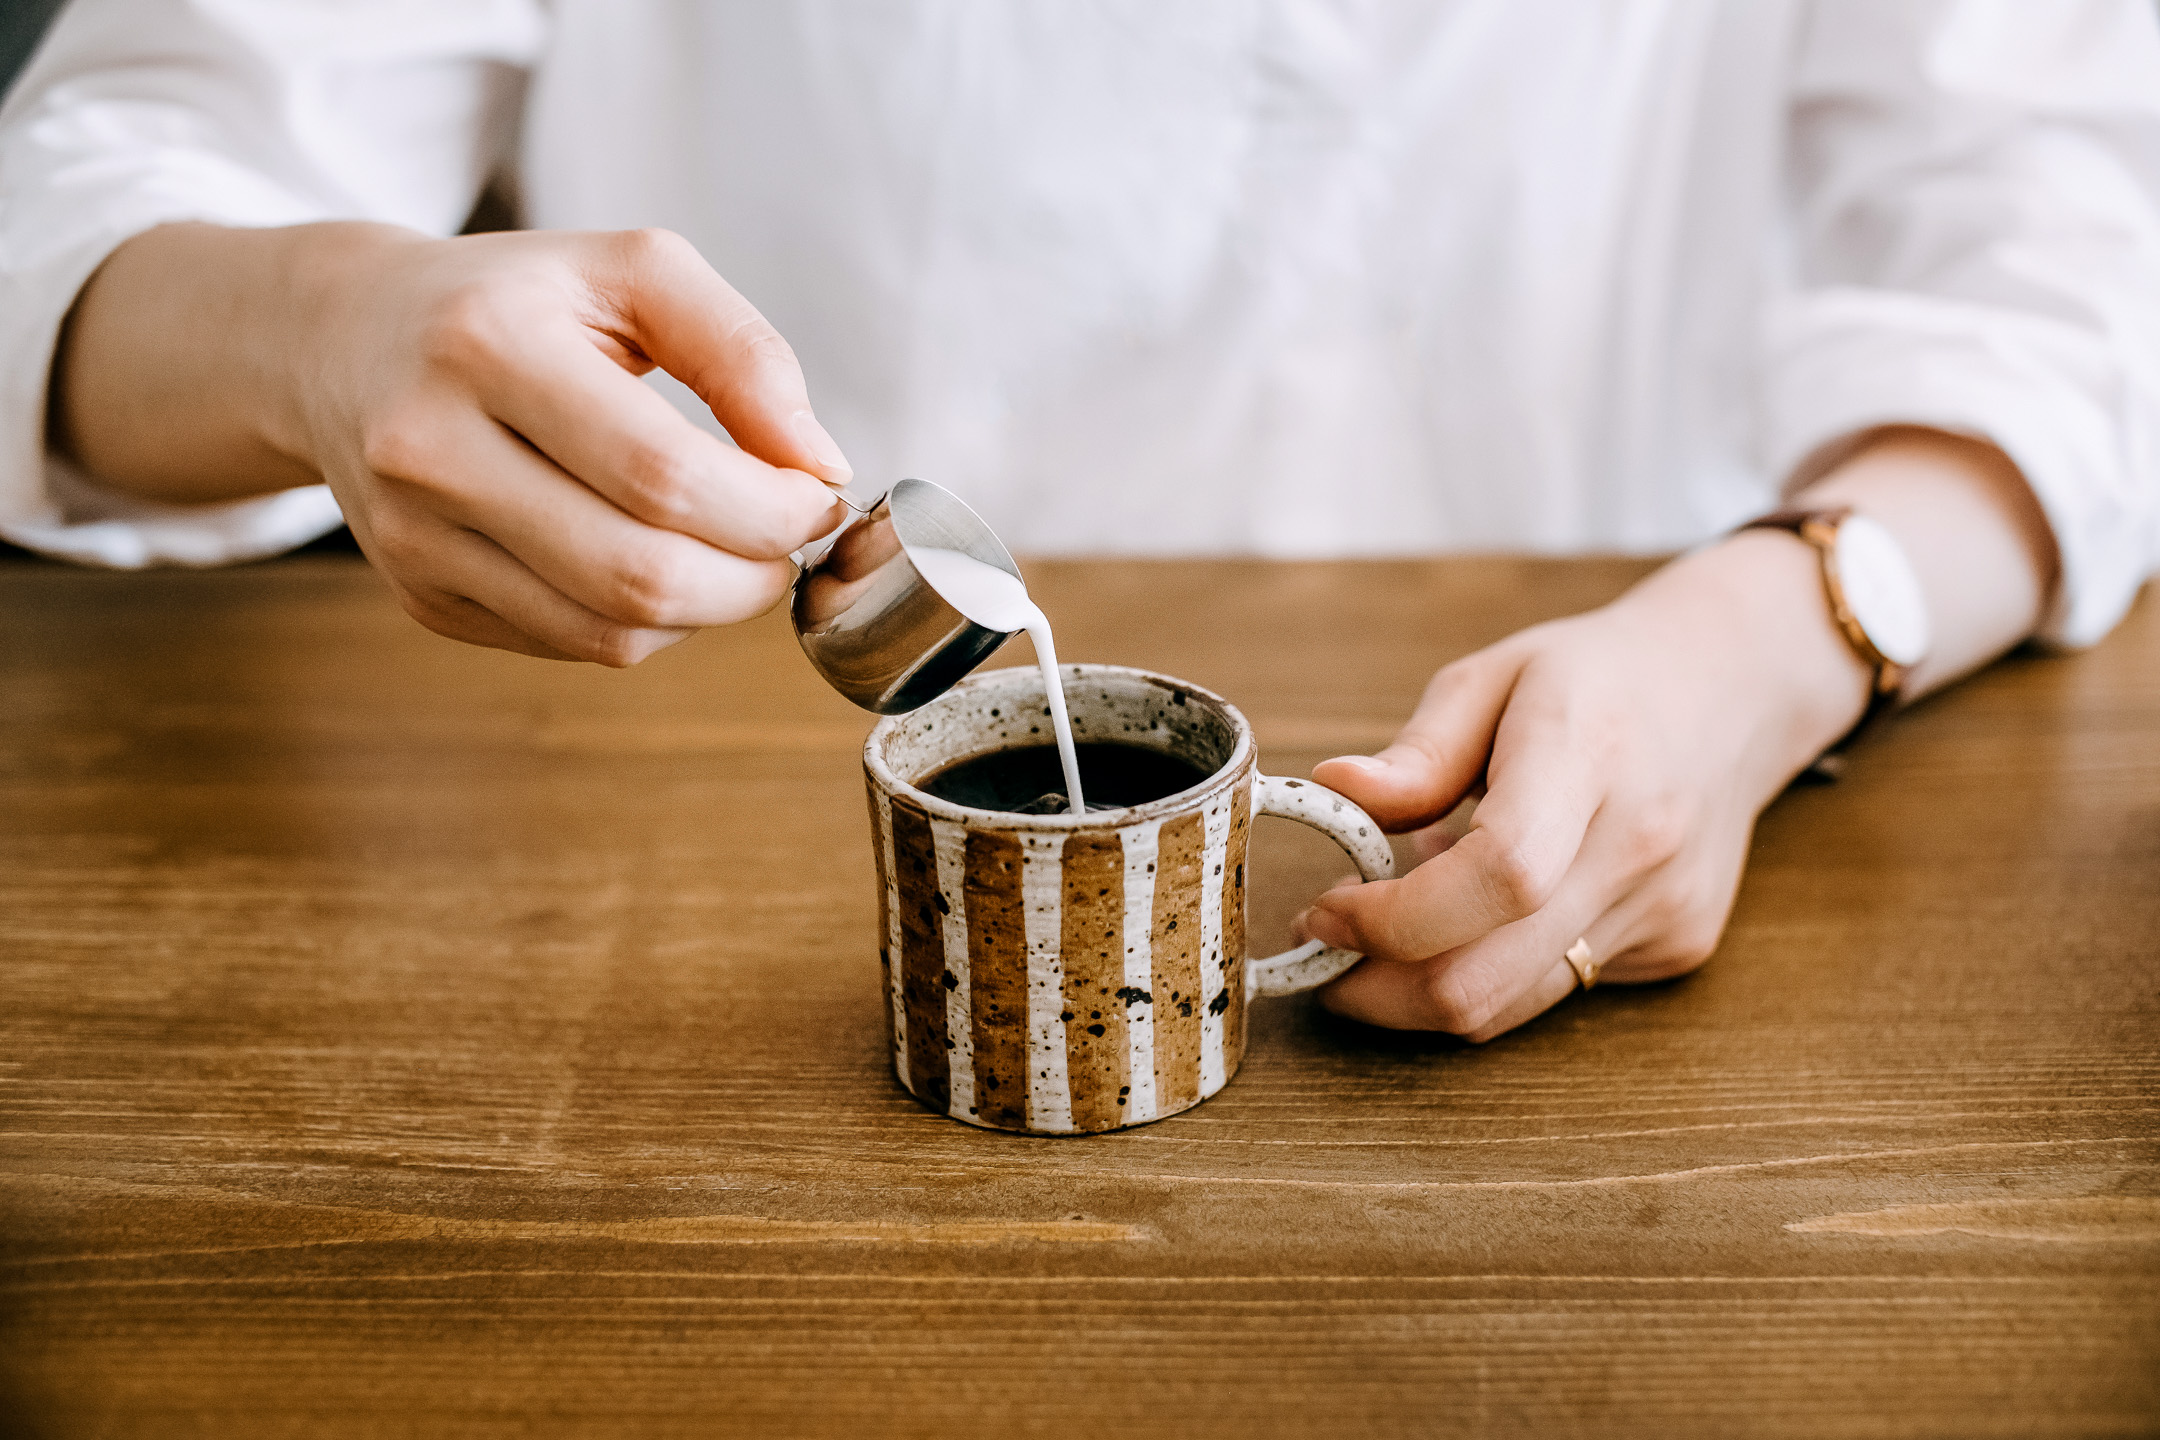 There is coffee in the cup. Наливает кофе. Оксака кофе. Стакан для кофе. Кофе улучшает память.